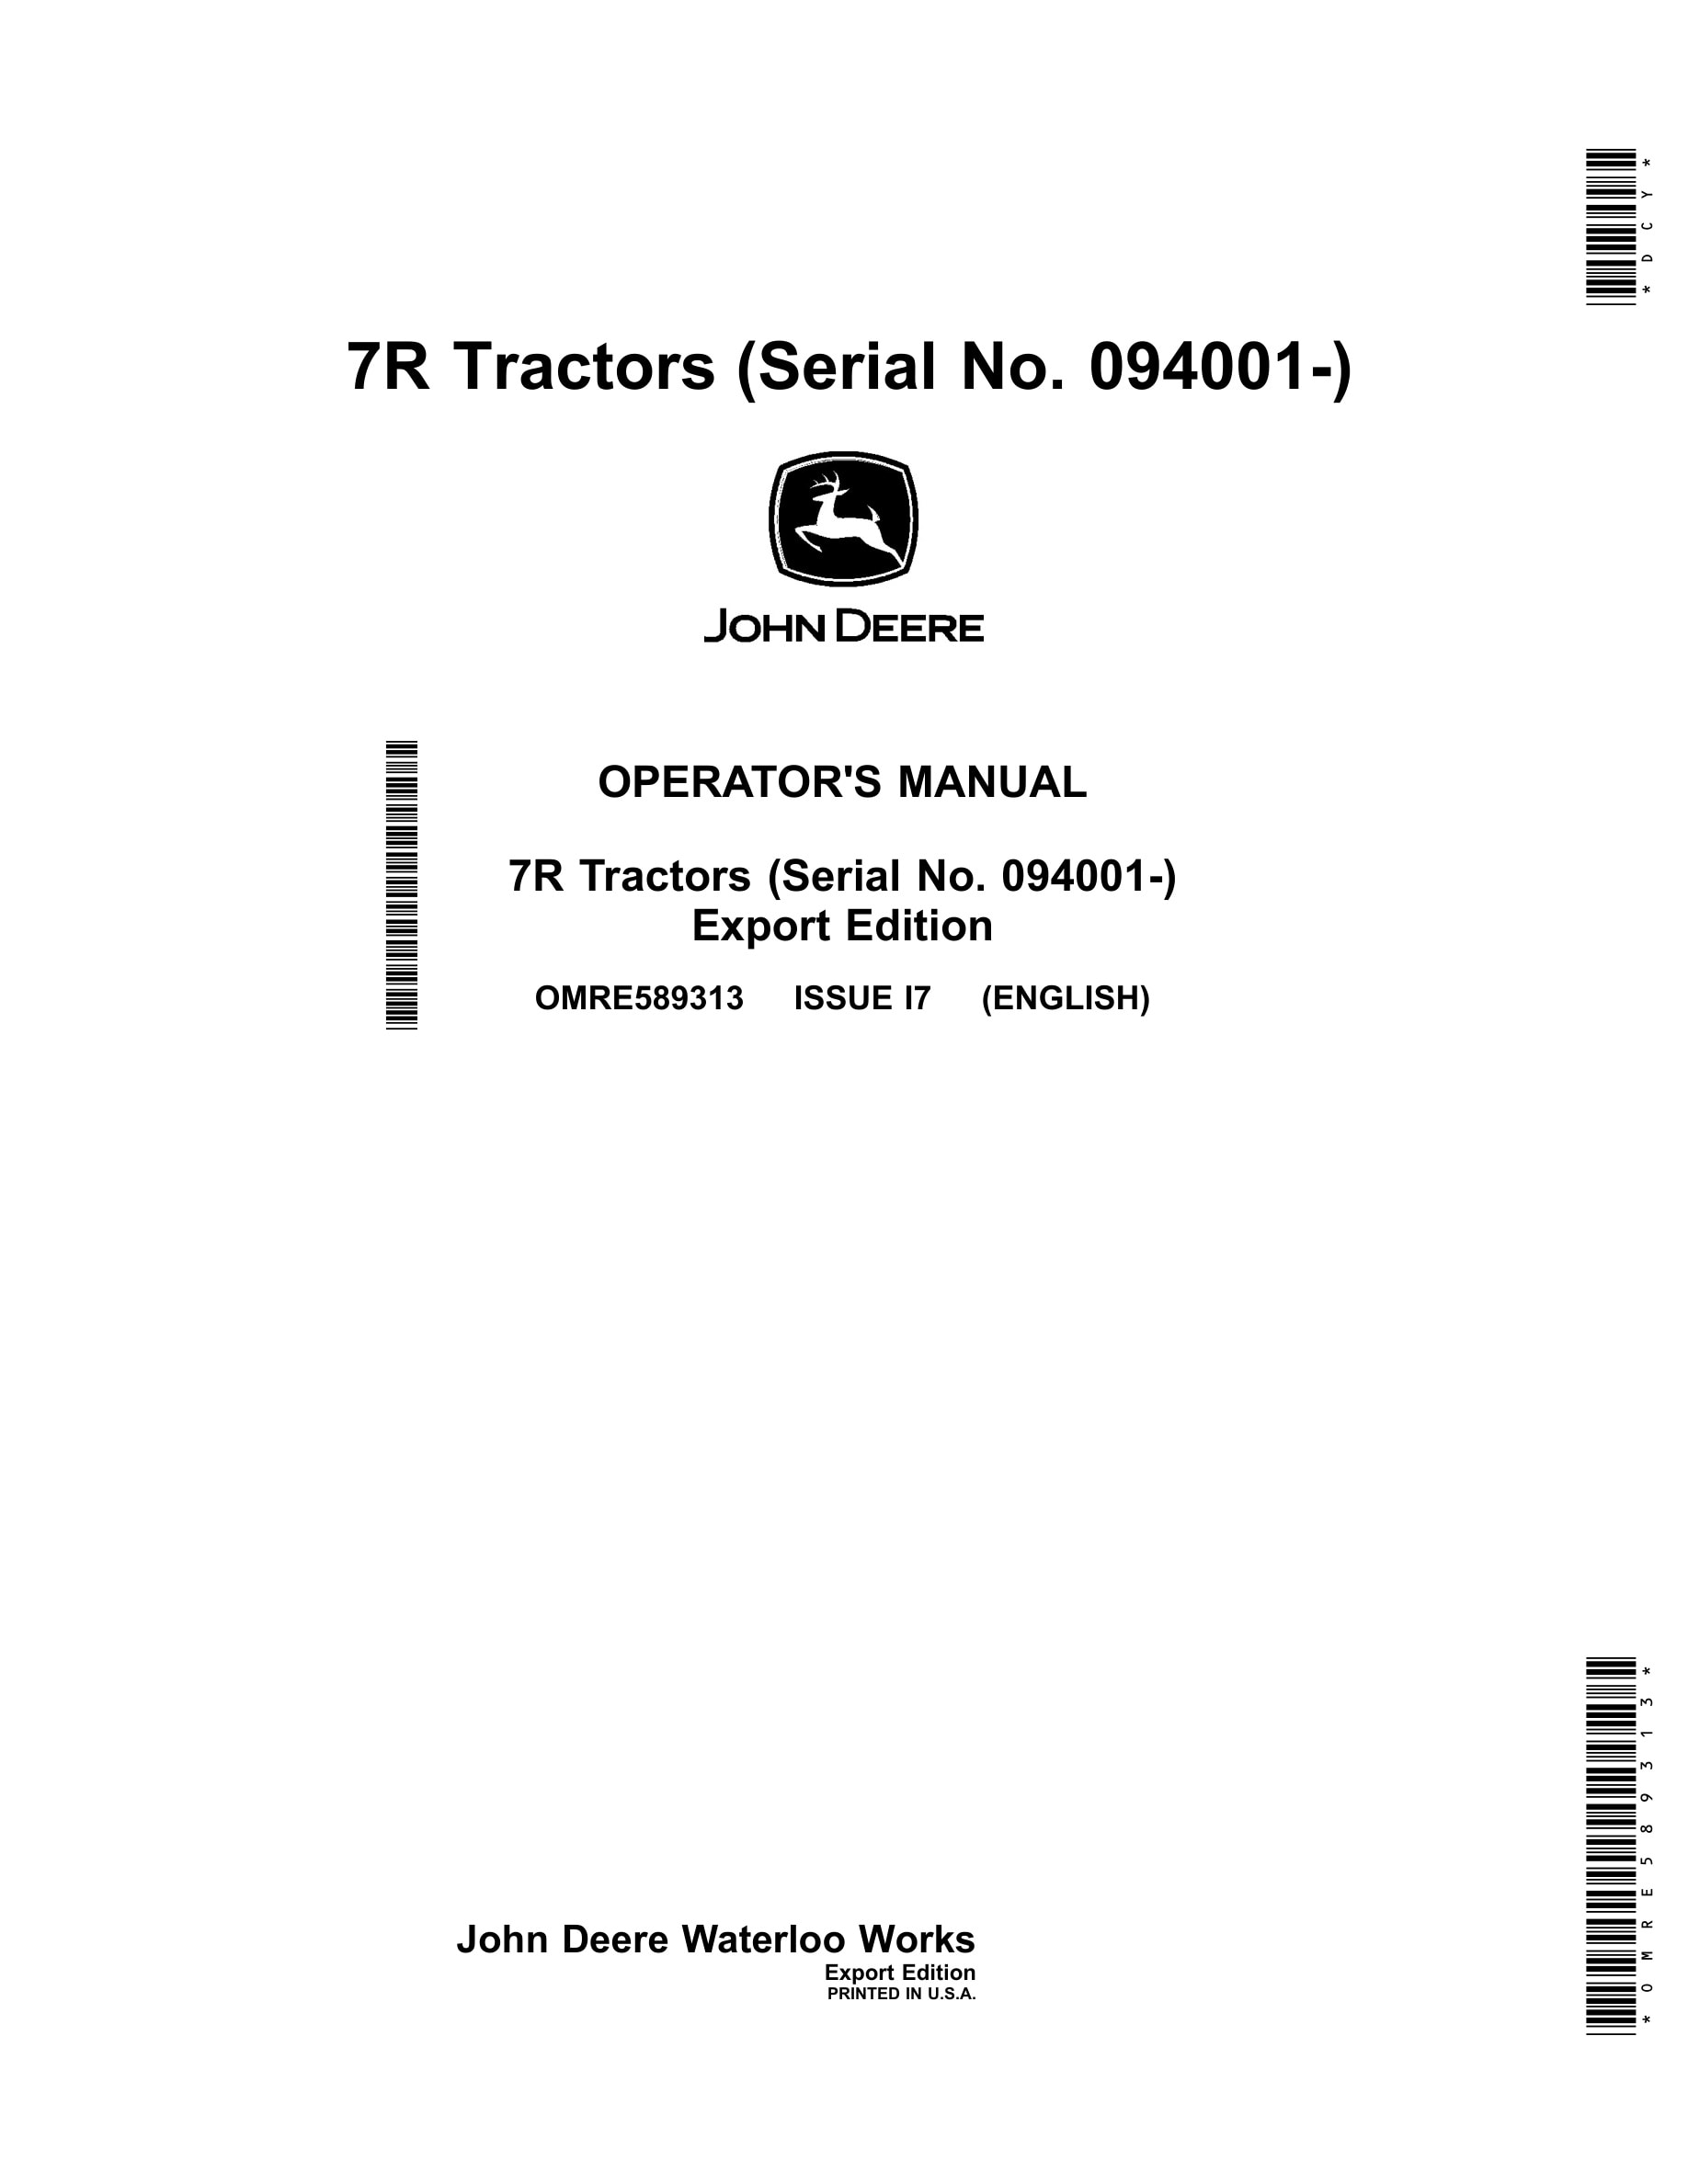 John Deere 7r Tractors Operator Manuals OMRE589313-1